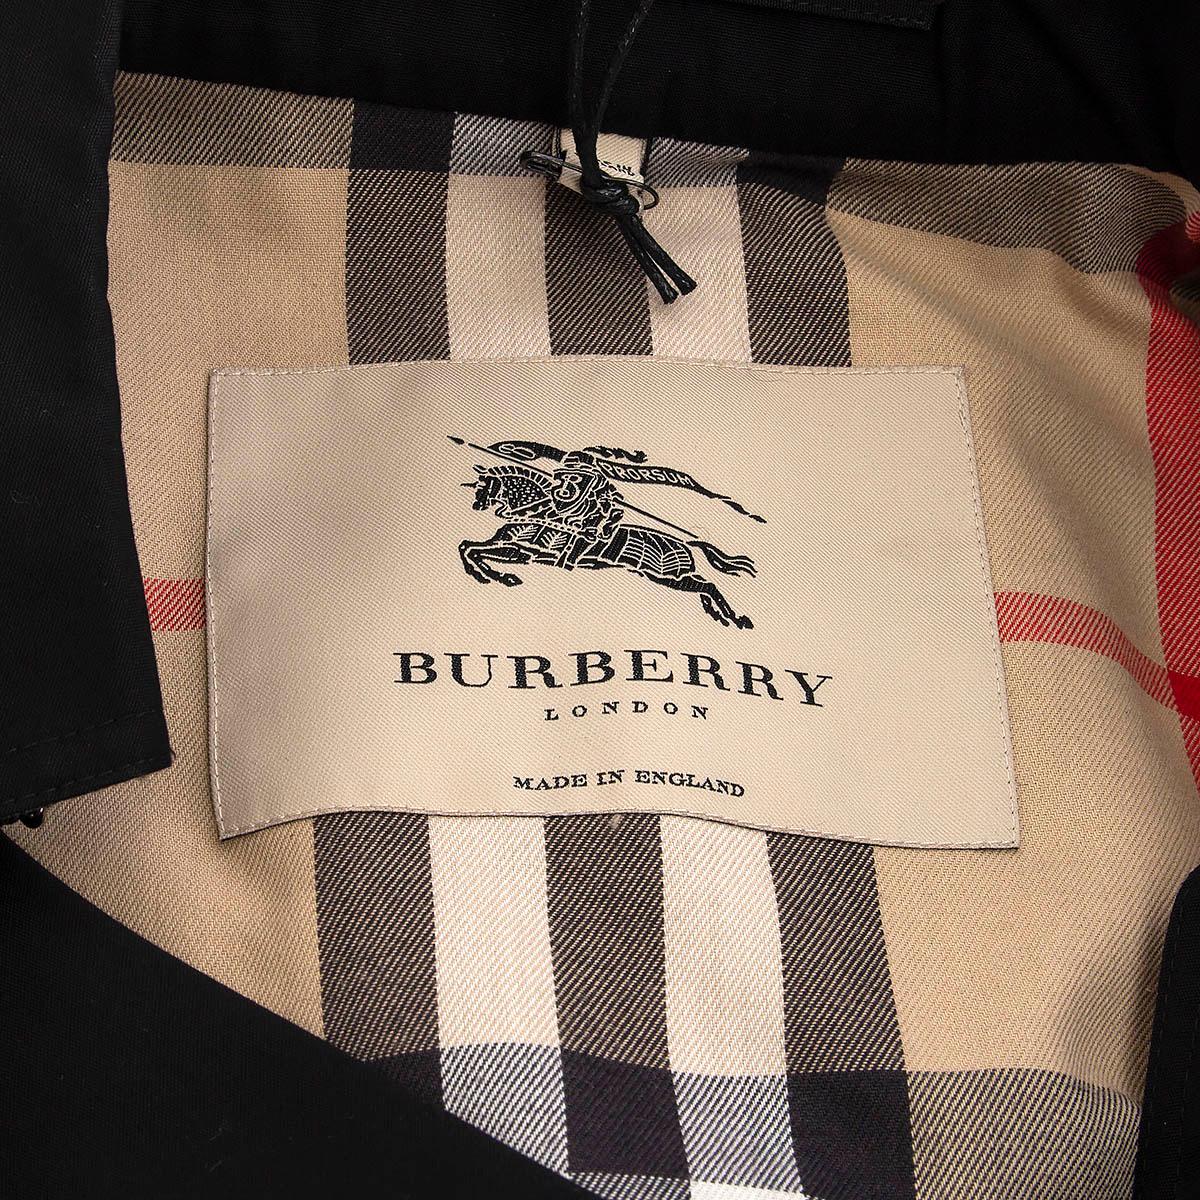 BURBERRY LONDON black cotton blend KENSINGTON SHORT TRENCH Coat Jacket 10 S 1